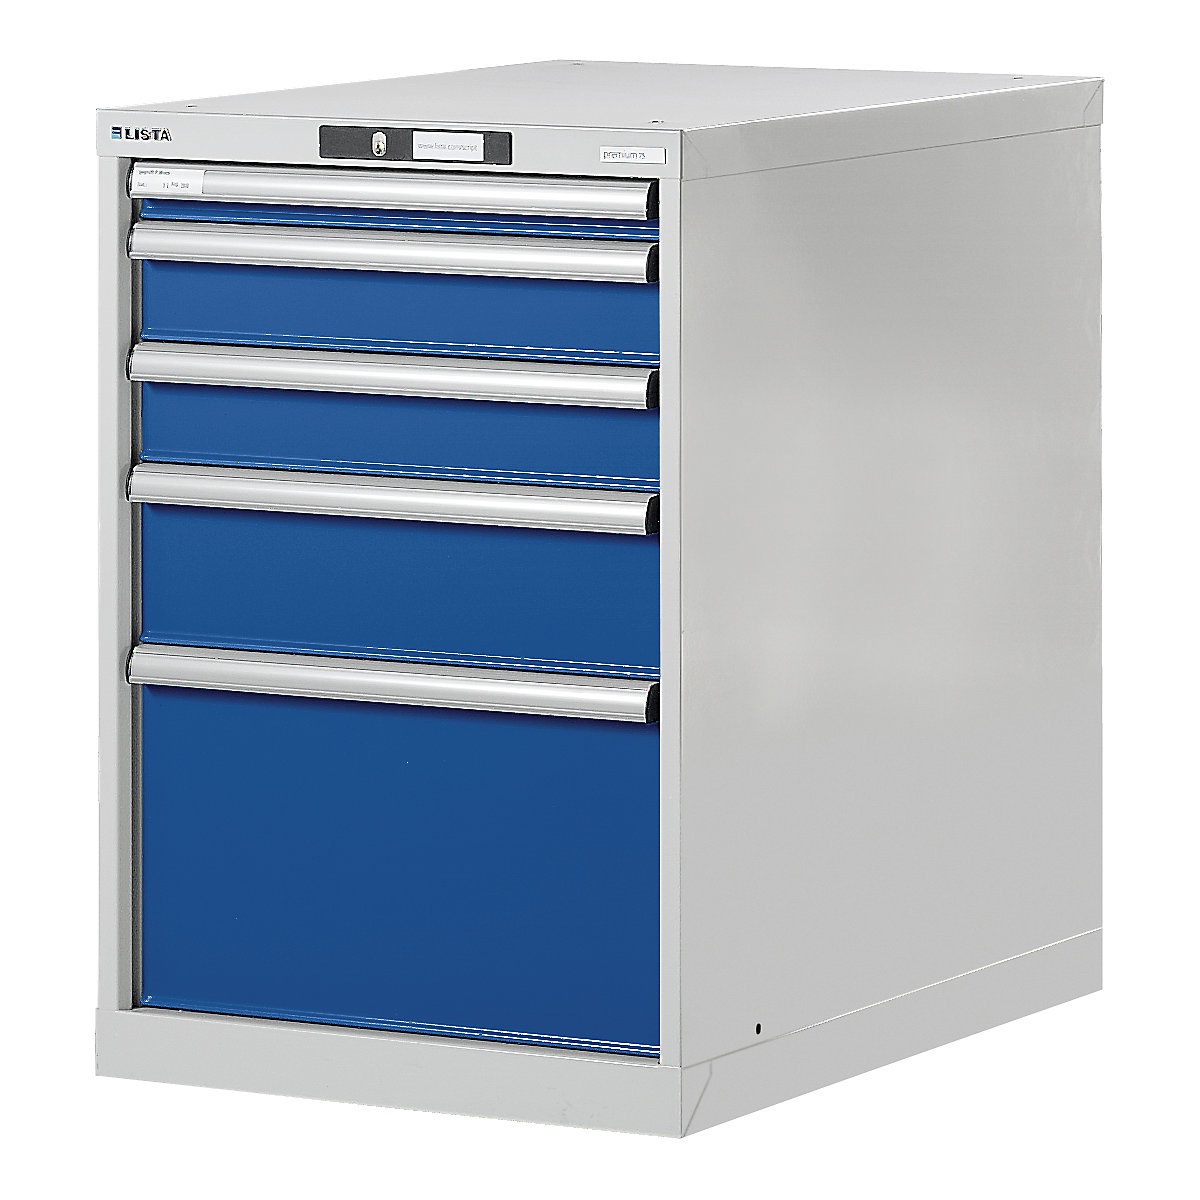 Modular workbench system, drawer unit - LISTA